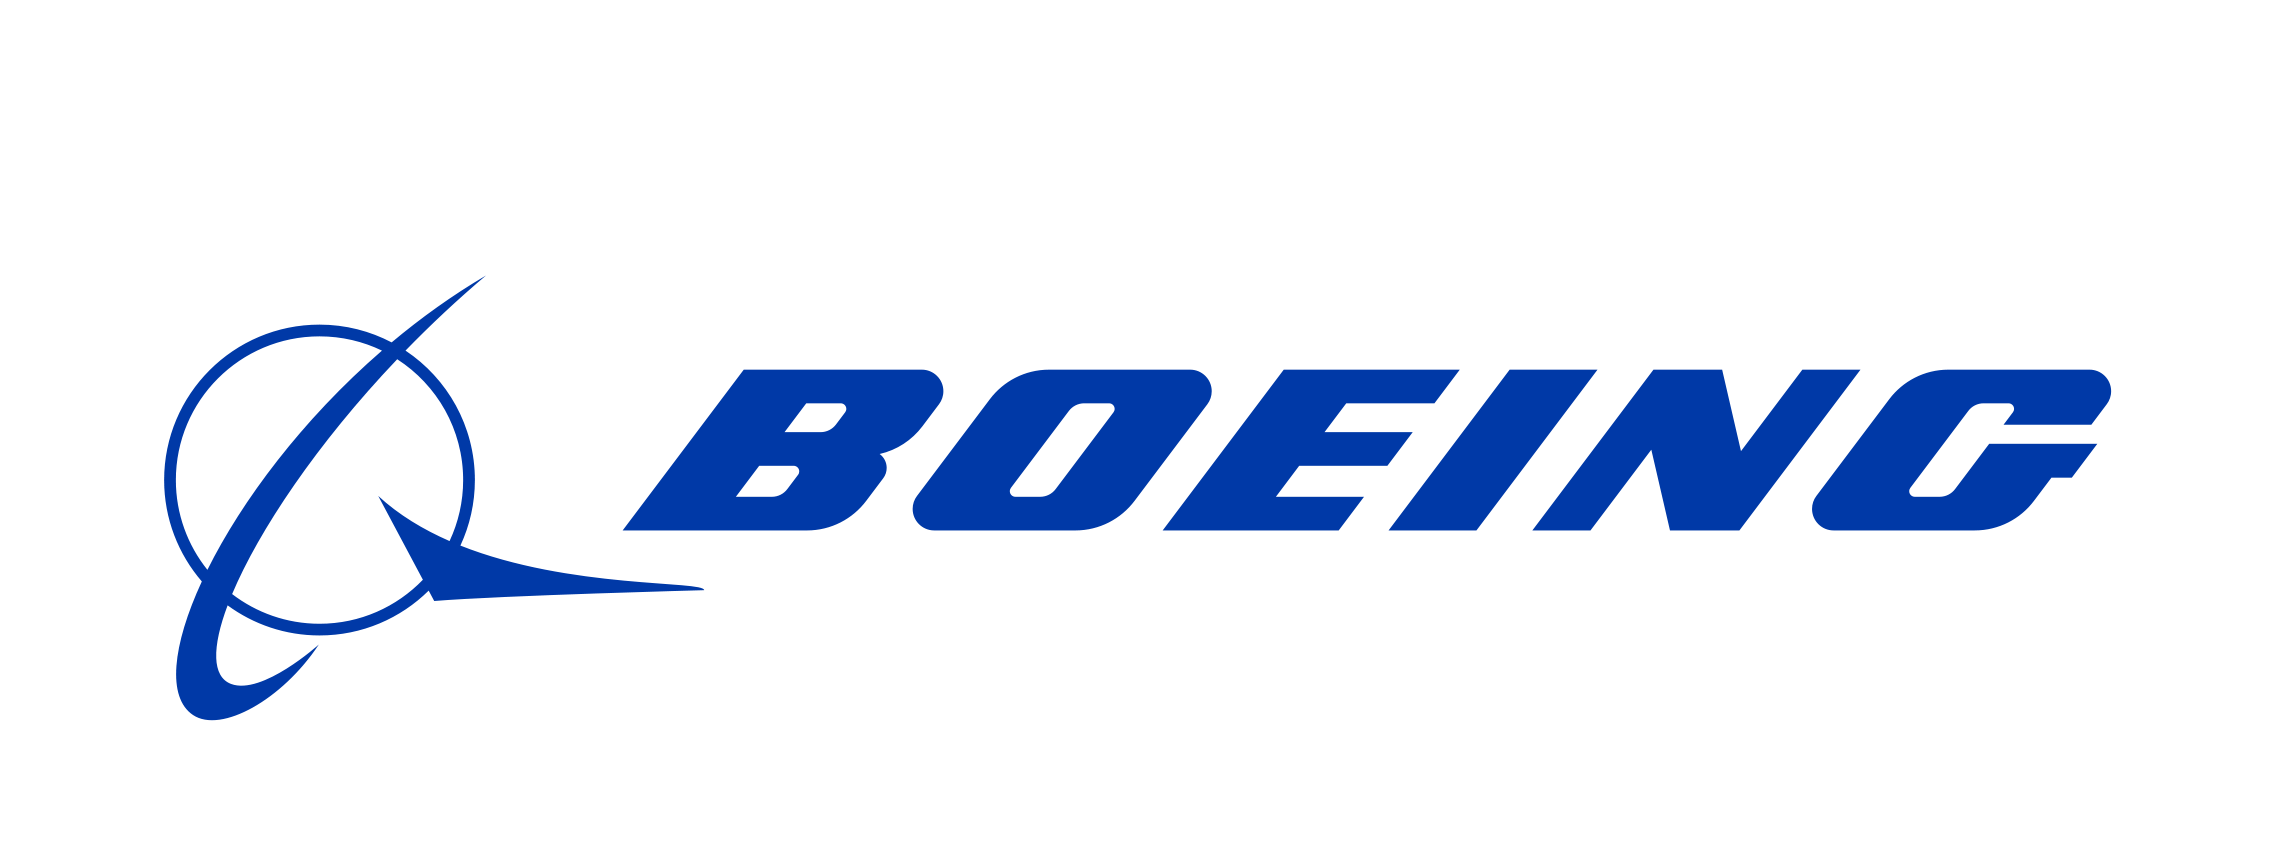 CDG Boeing Logo - Boeing: Boeing India - Home